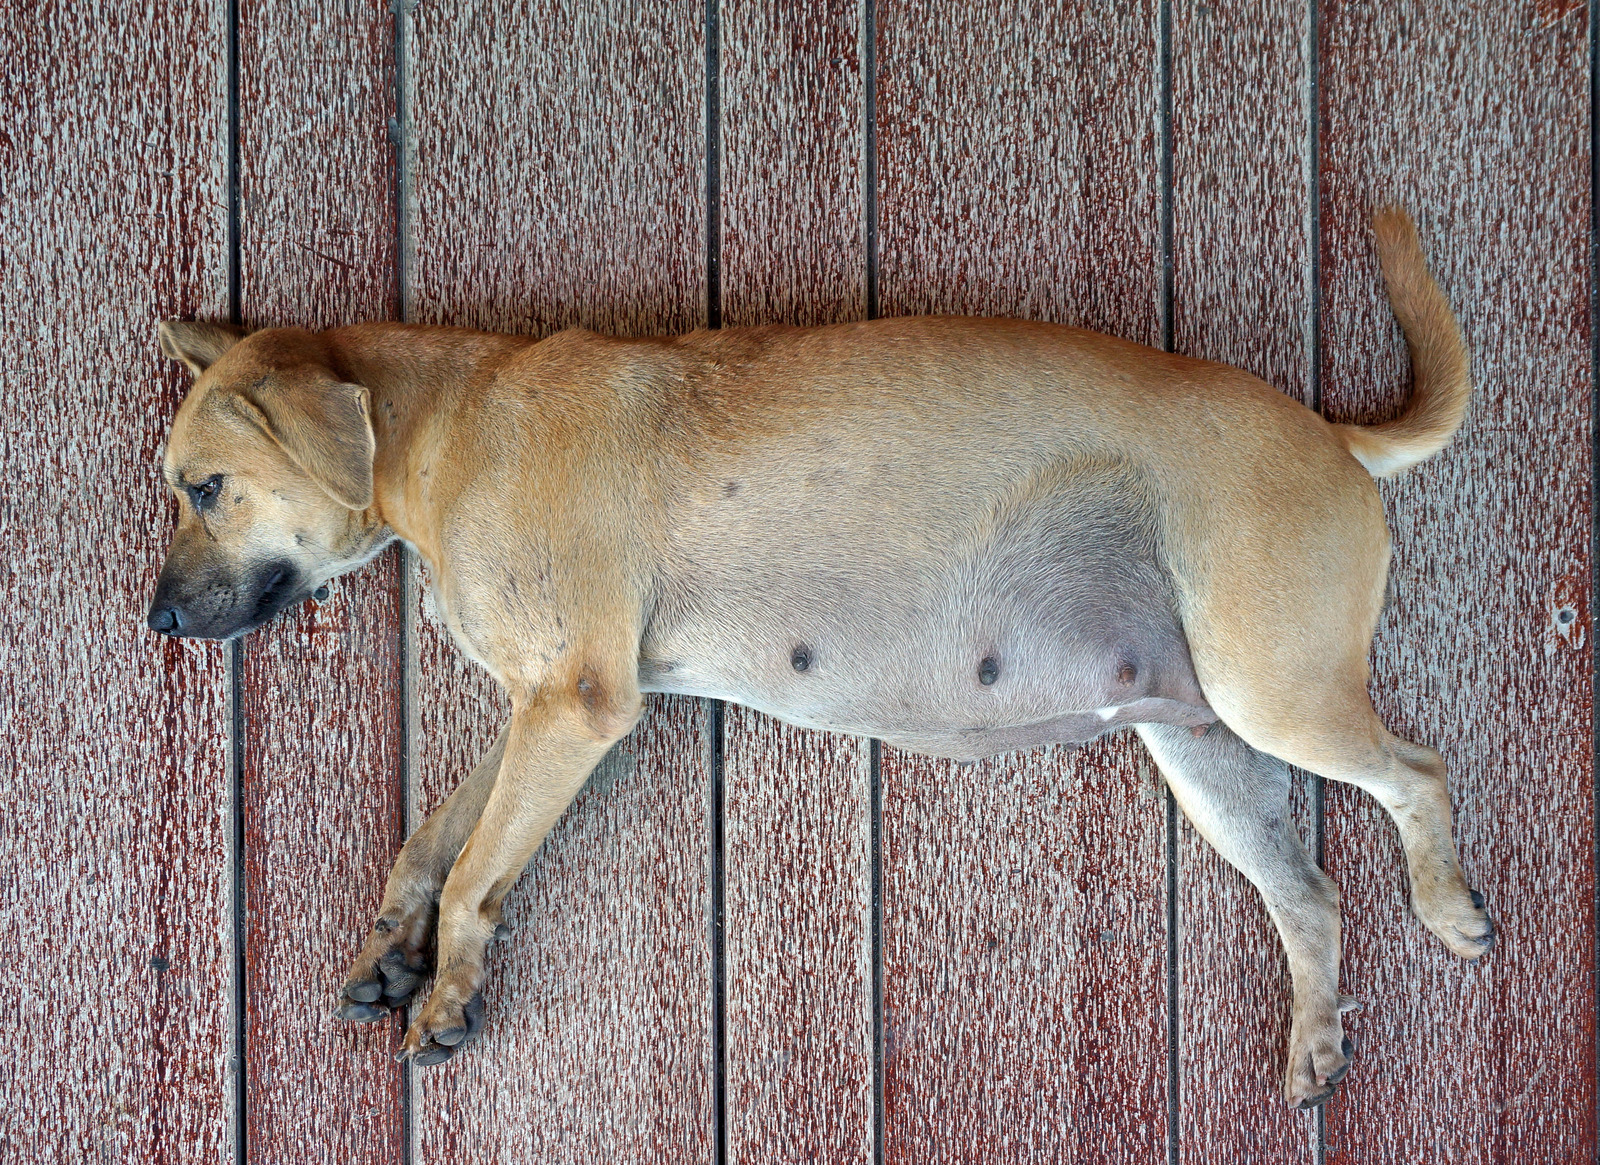 Bruine hond in zwangerschap ligt op houten vloer